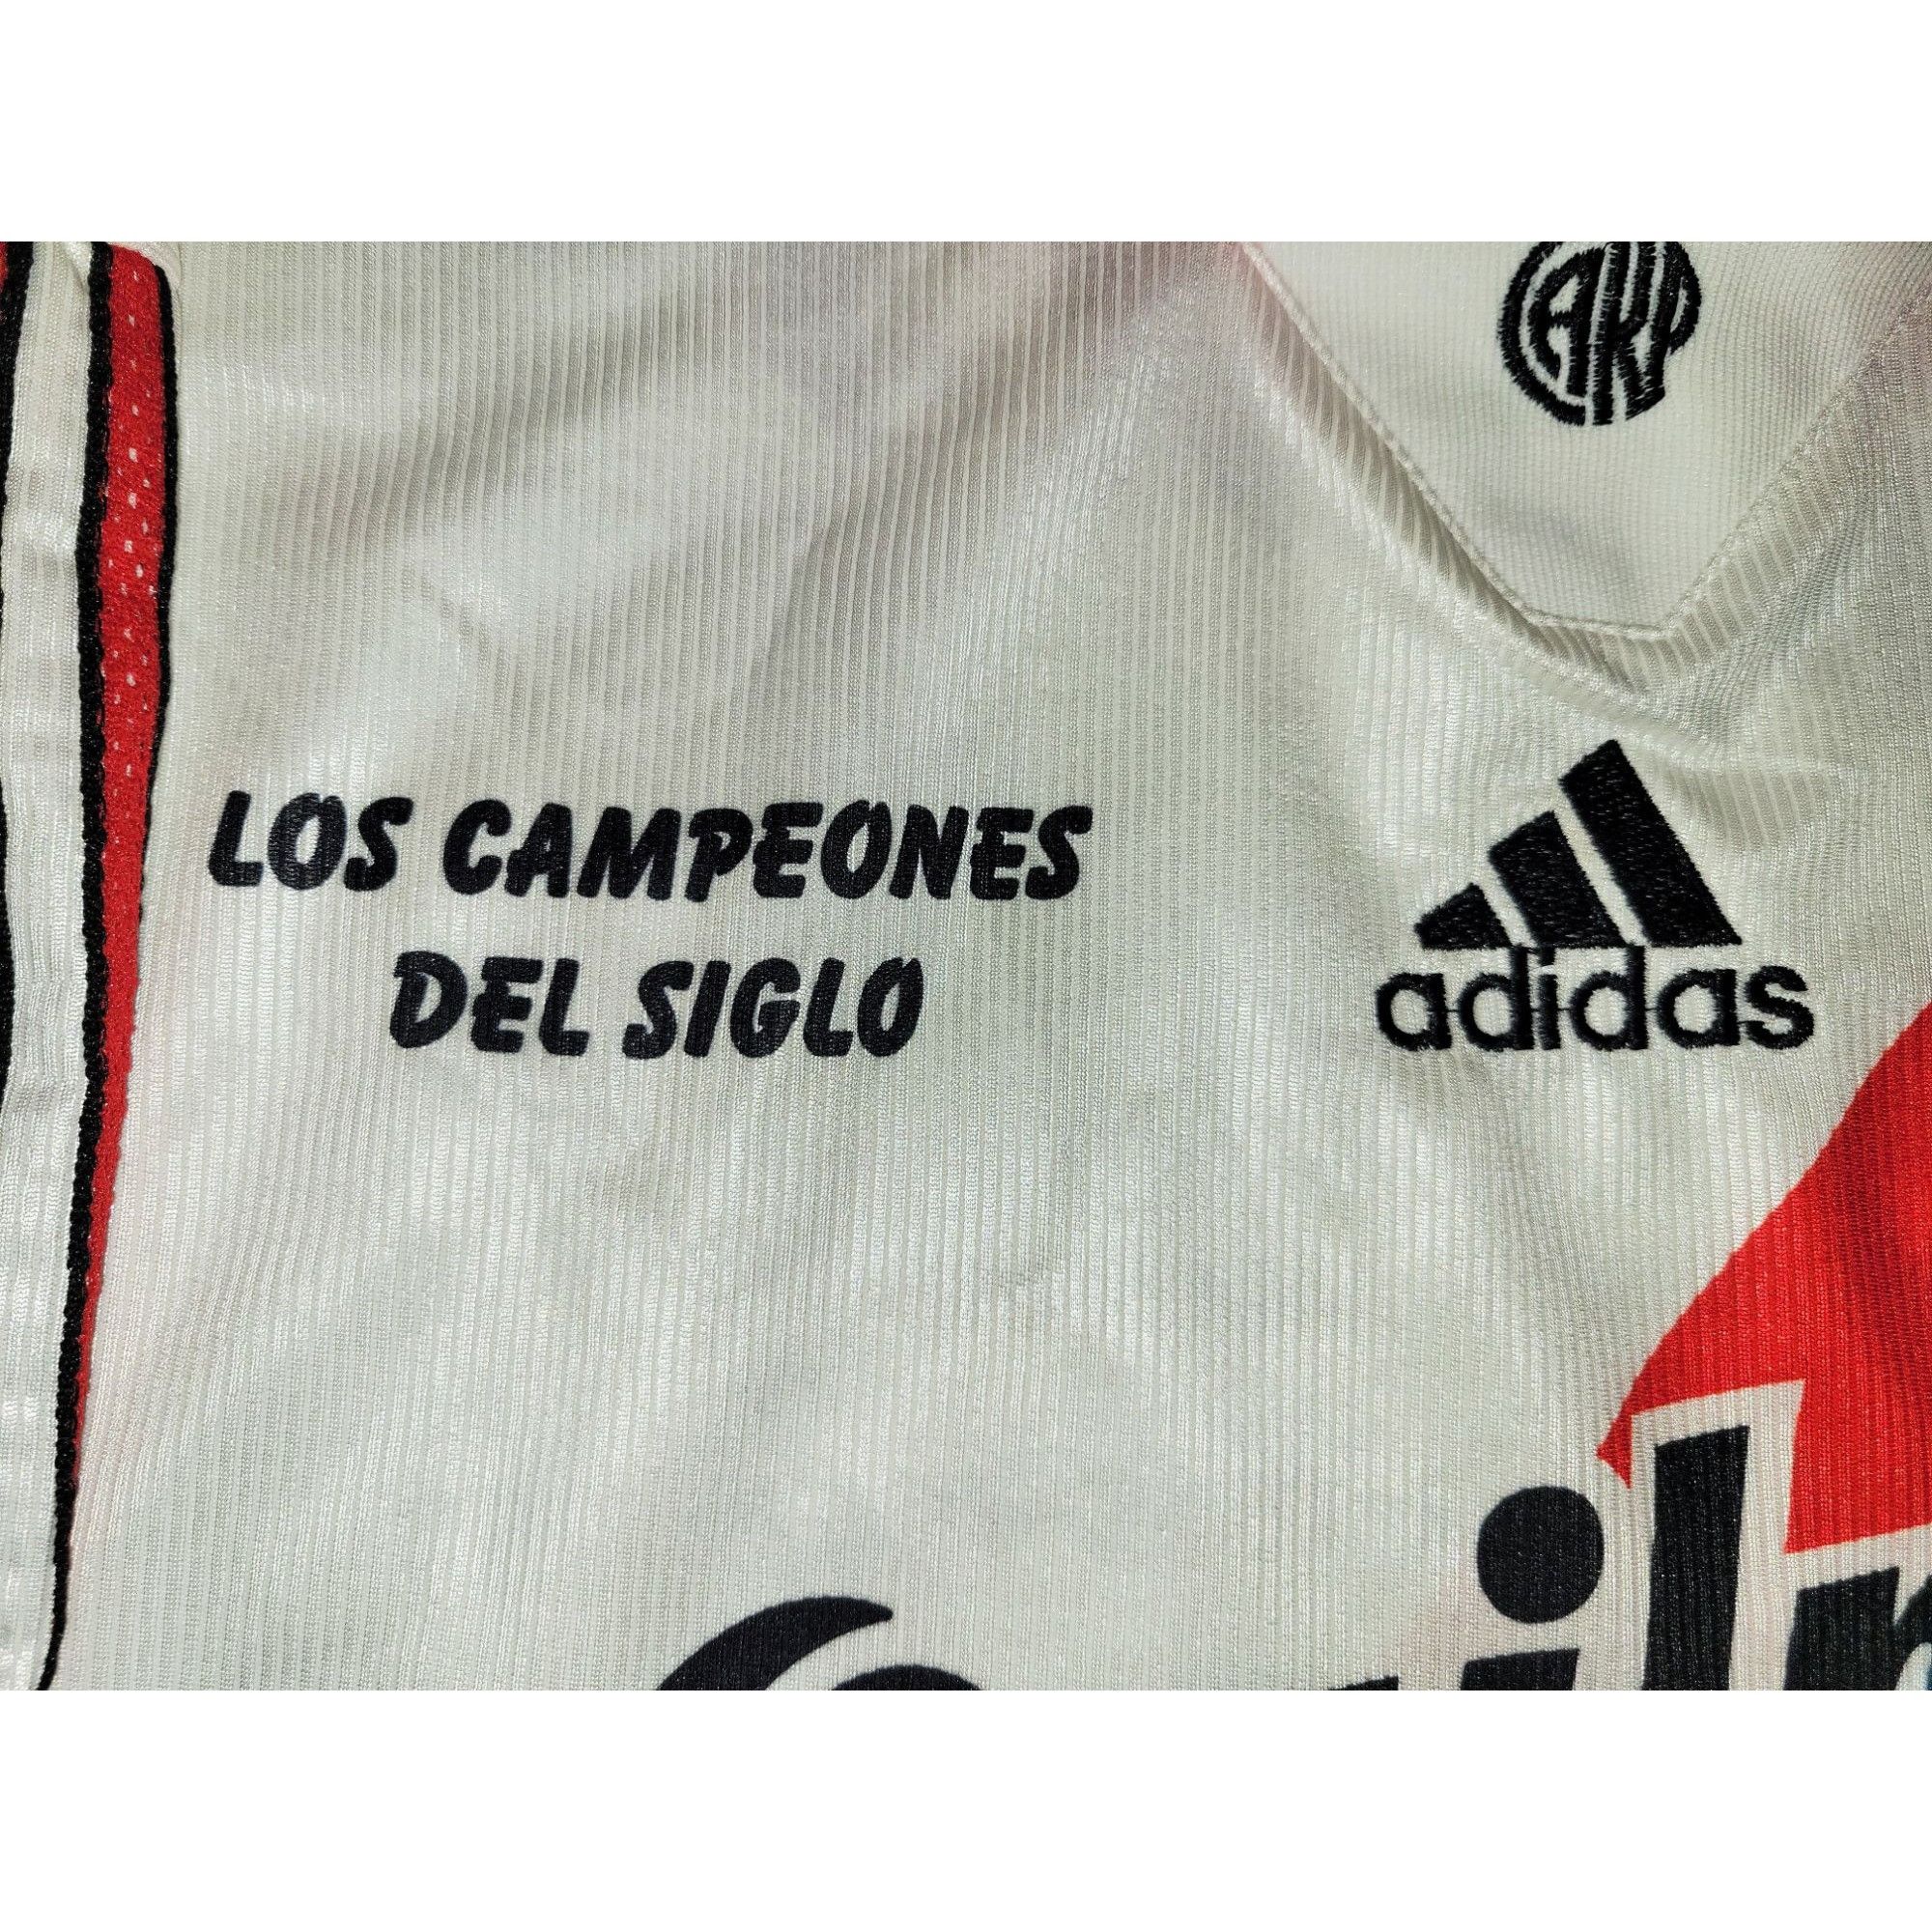 Adidas River Plate Adidas 1998 1999 2000 LTD EDITION Soccer Jersey Size US M / EU 48-50 / 2 - 4 Thumbnail